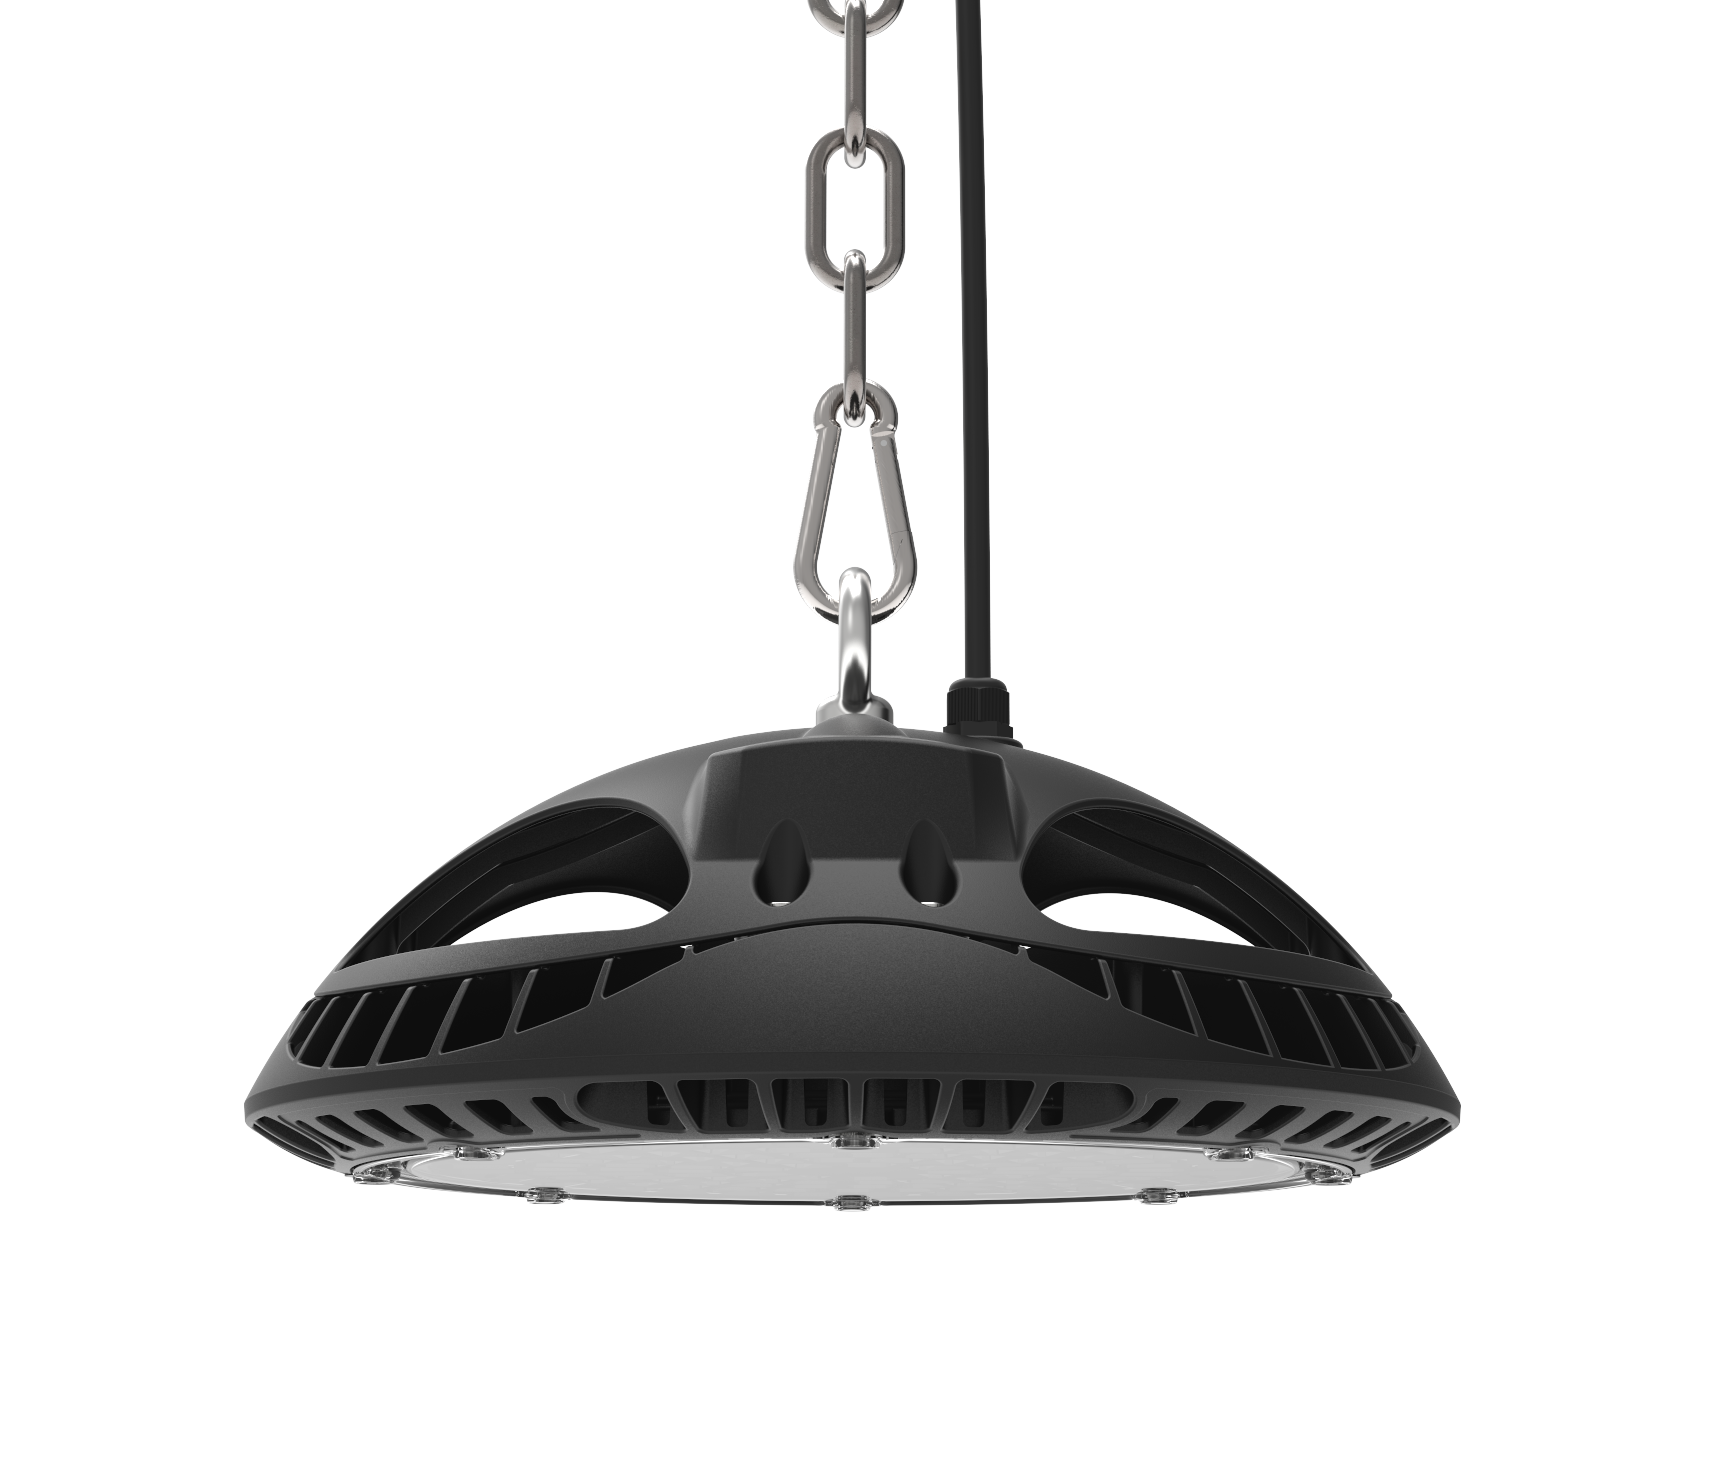 150W Apollo Pro LED Highbay 5700K 100° Beam Angle with Glare Shield 19,500lm Finish: Graphite Black